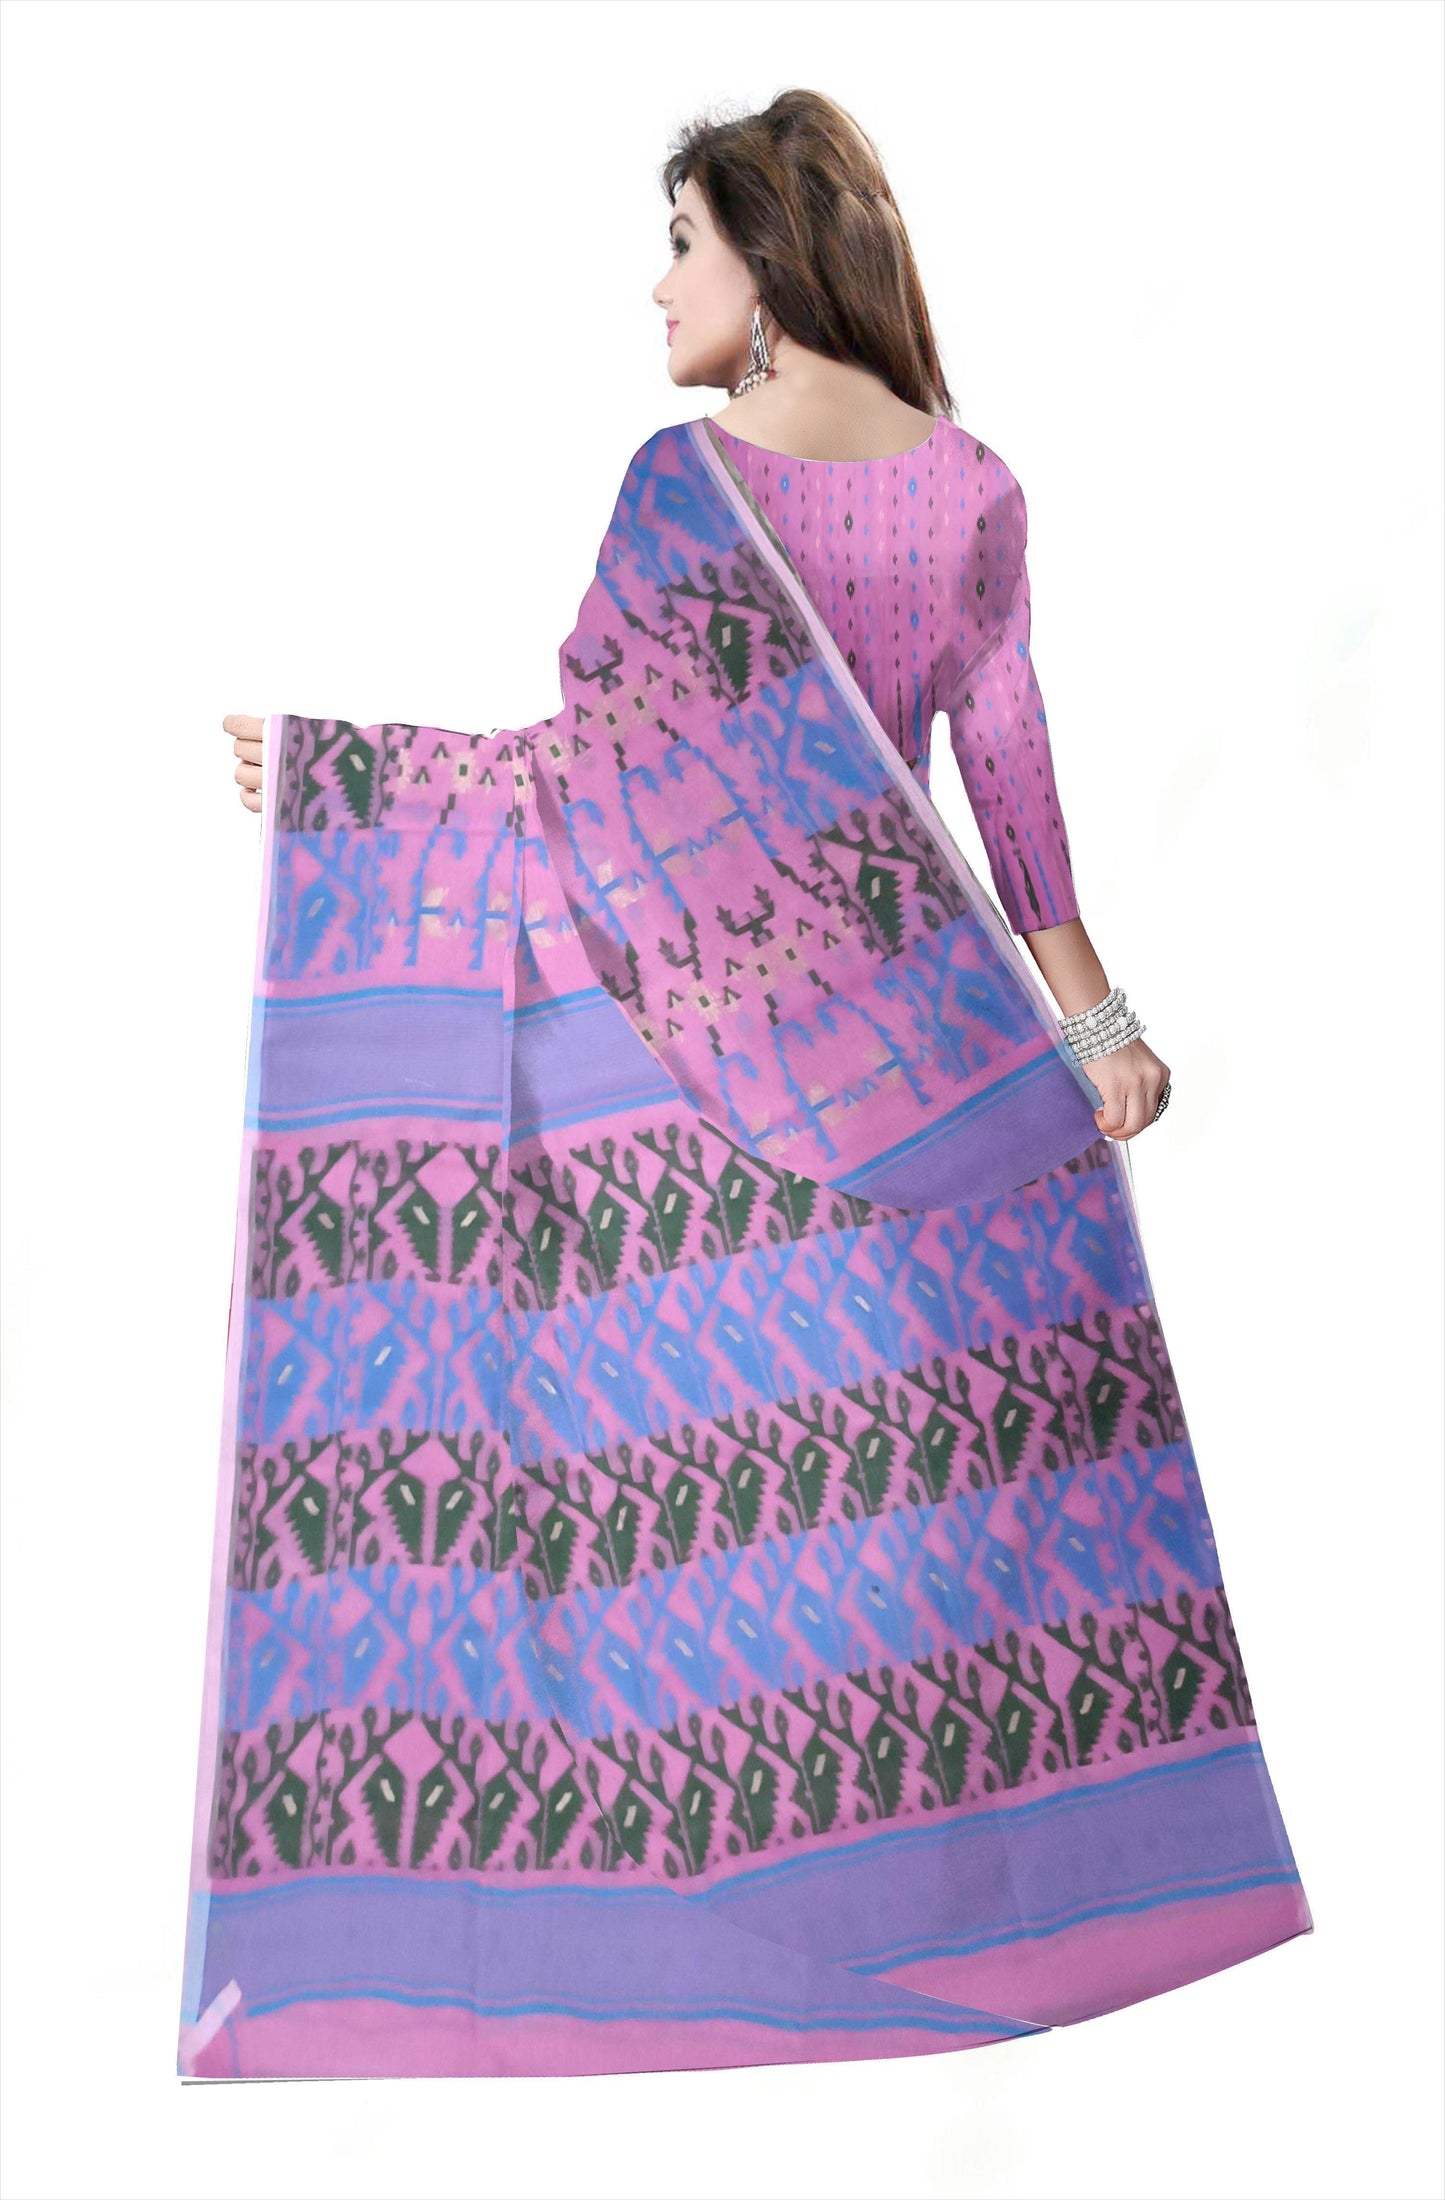 Pradip Fabrics Ethnic Women's Cotton Tant Gap Jamdani pink  Color Saree